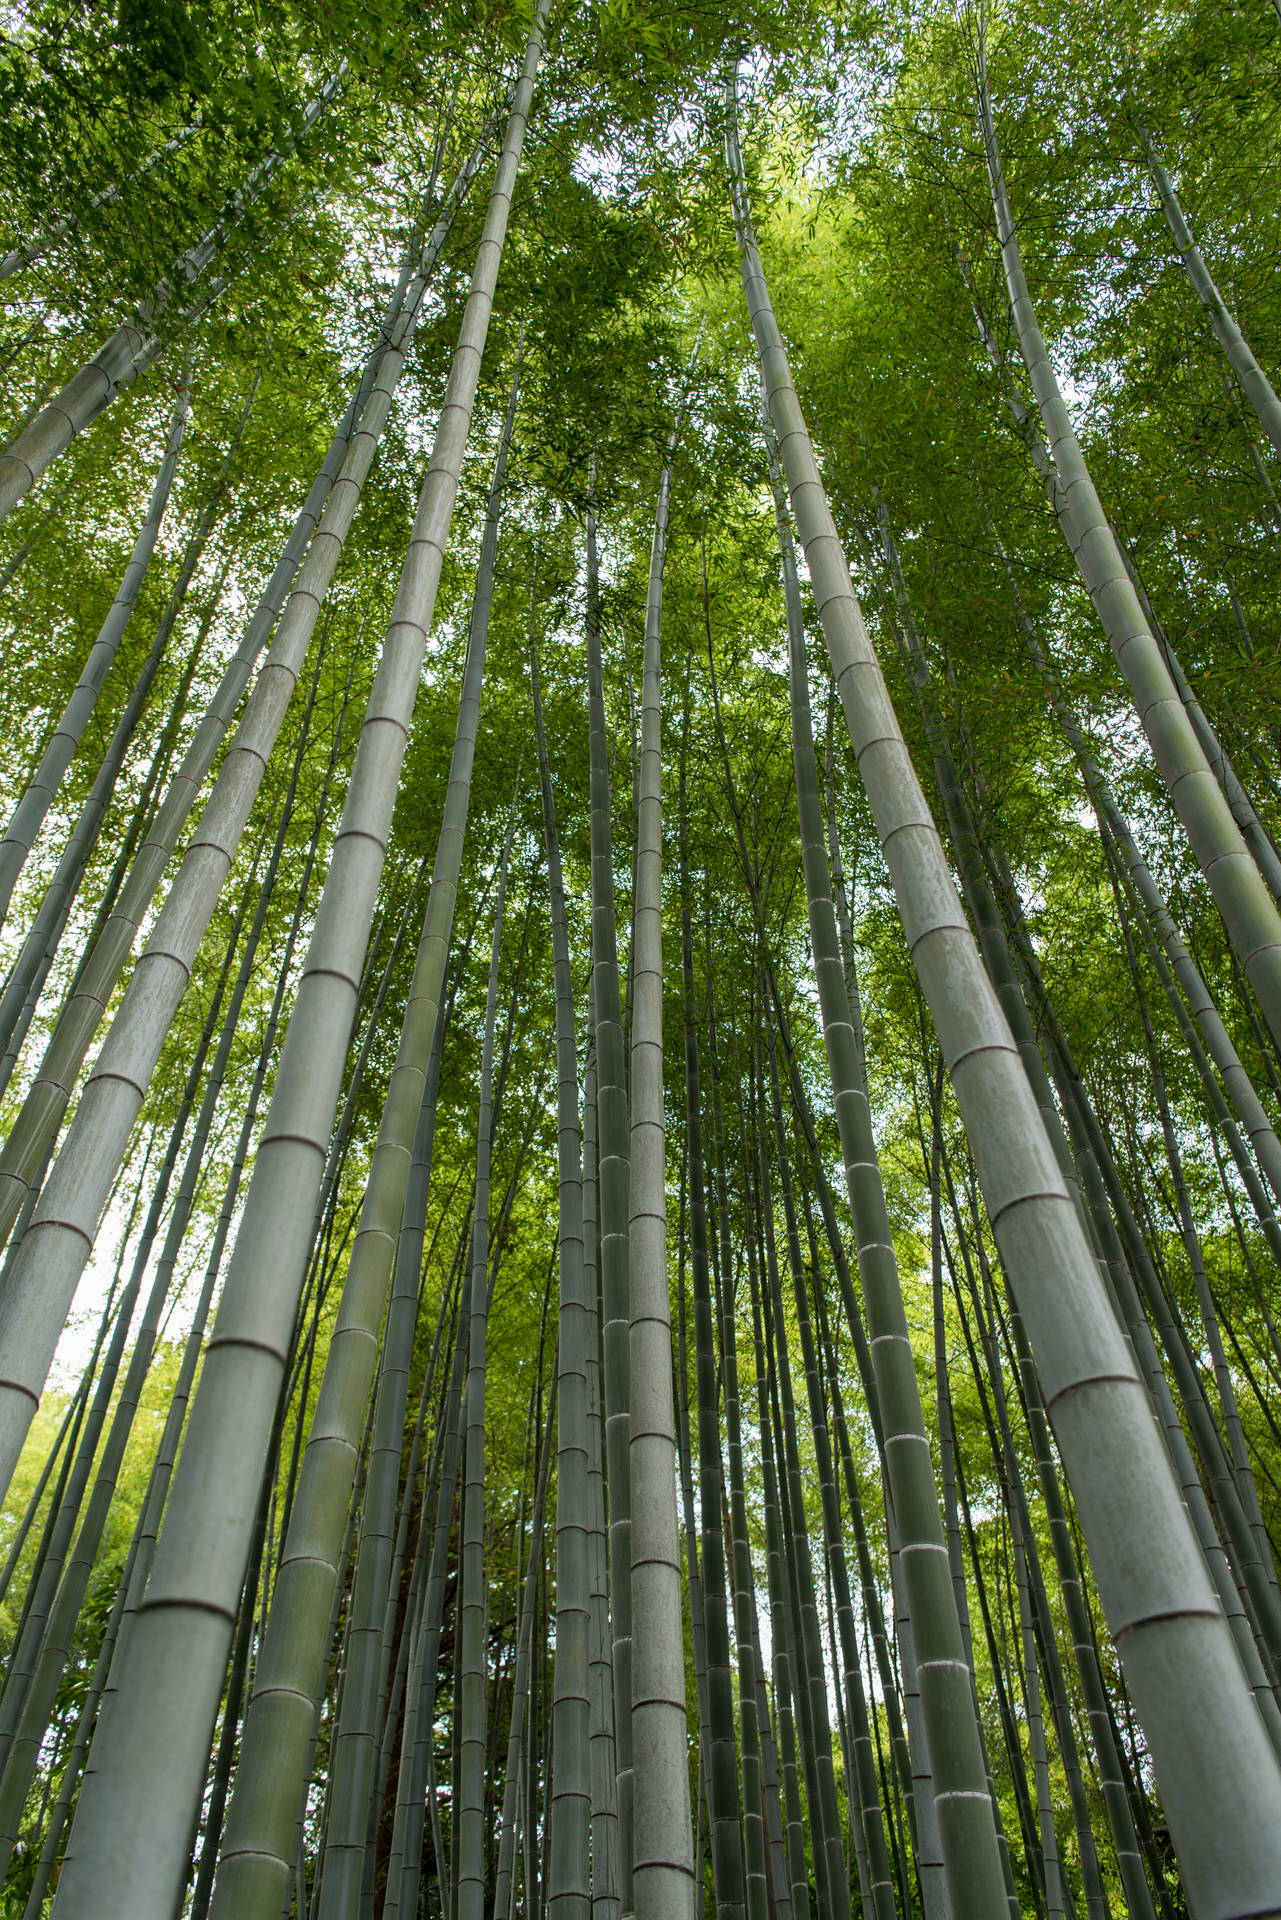 Lengthy Bamboo Plants